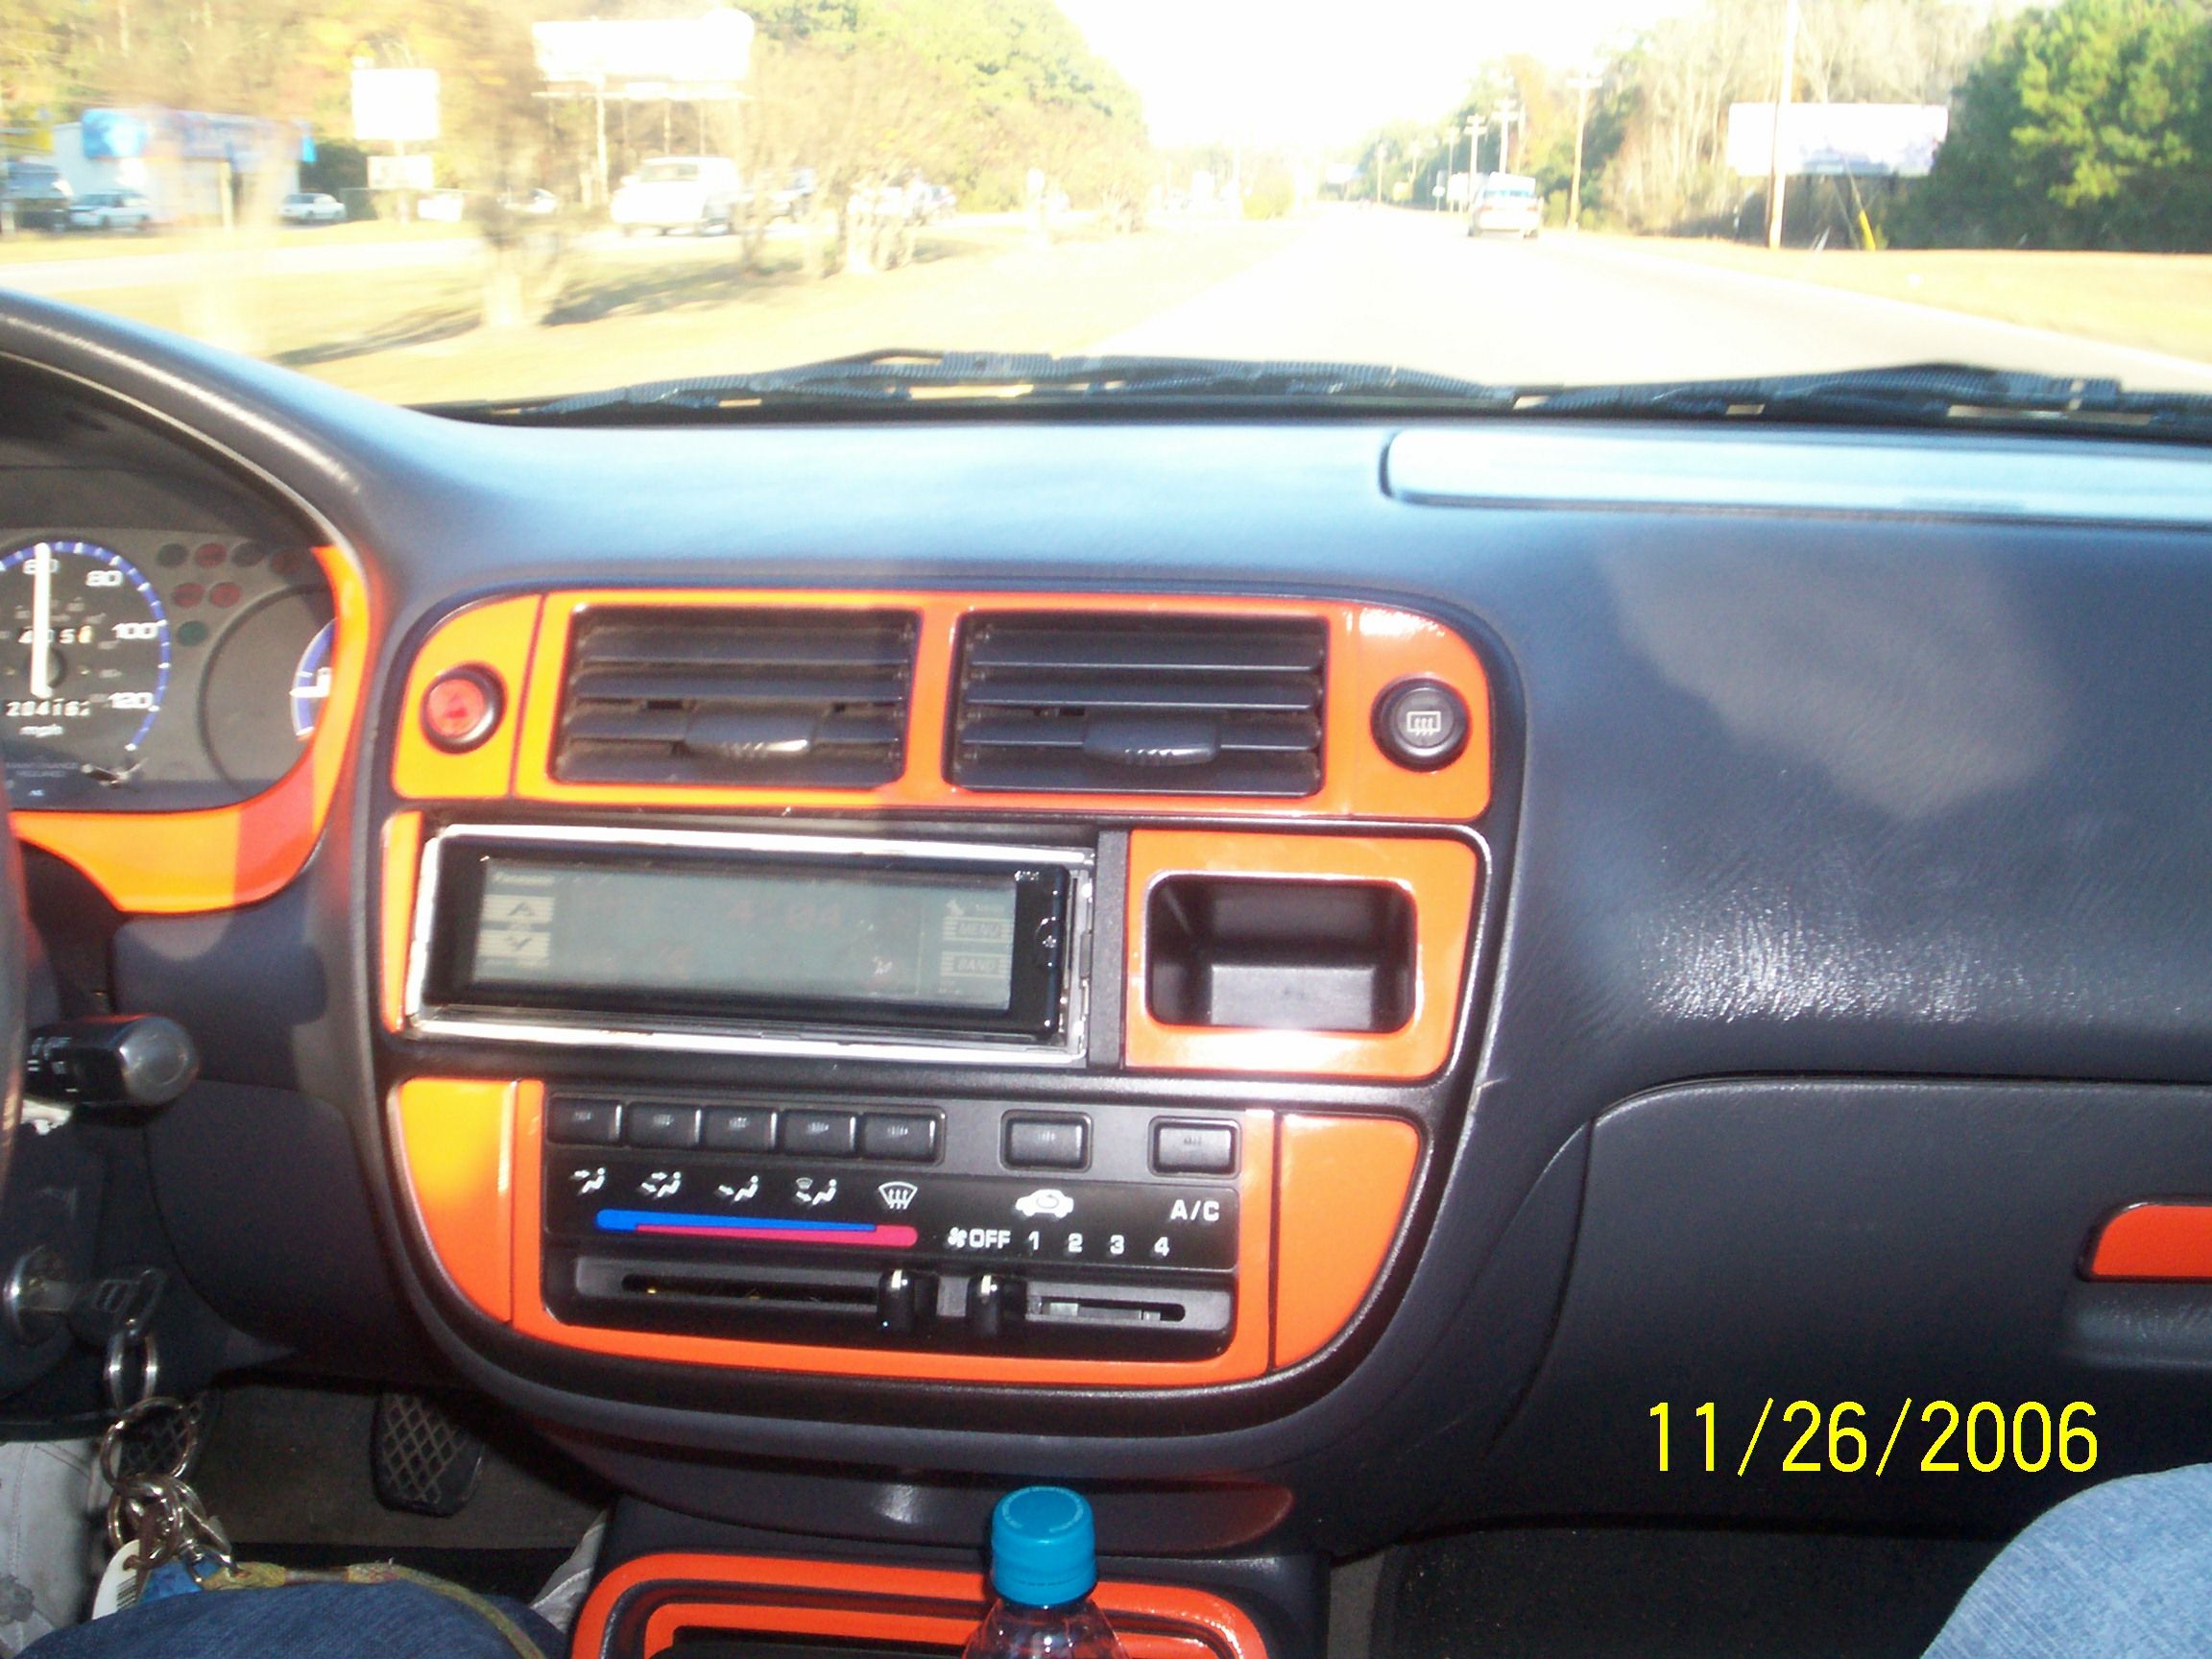 My Orange 96 Civic